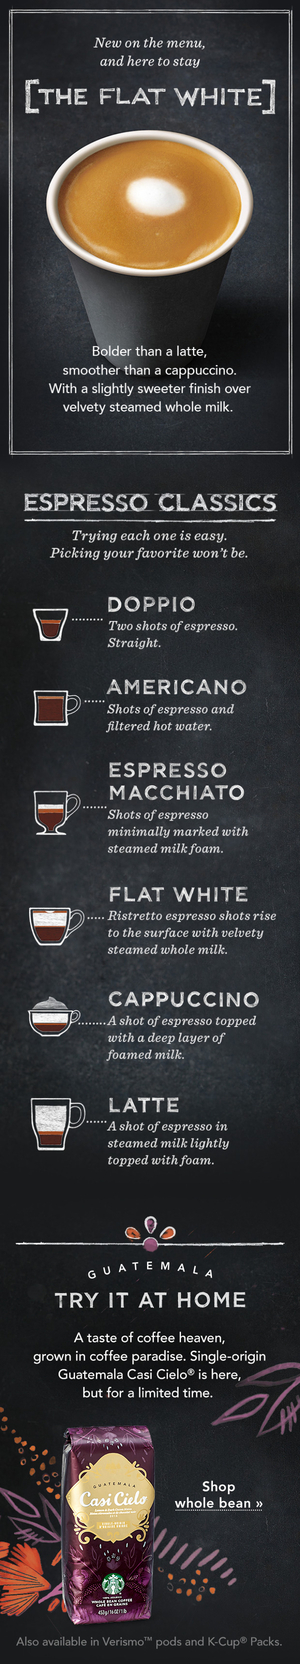 Starbucks The Flat White Espresso Email Infographic